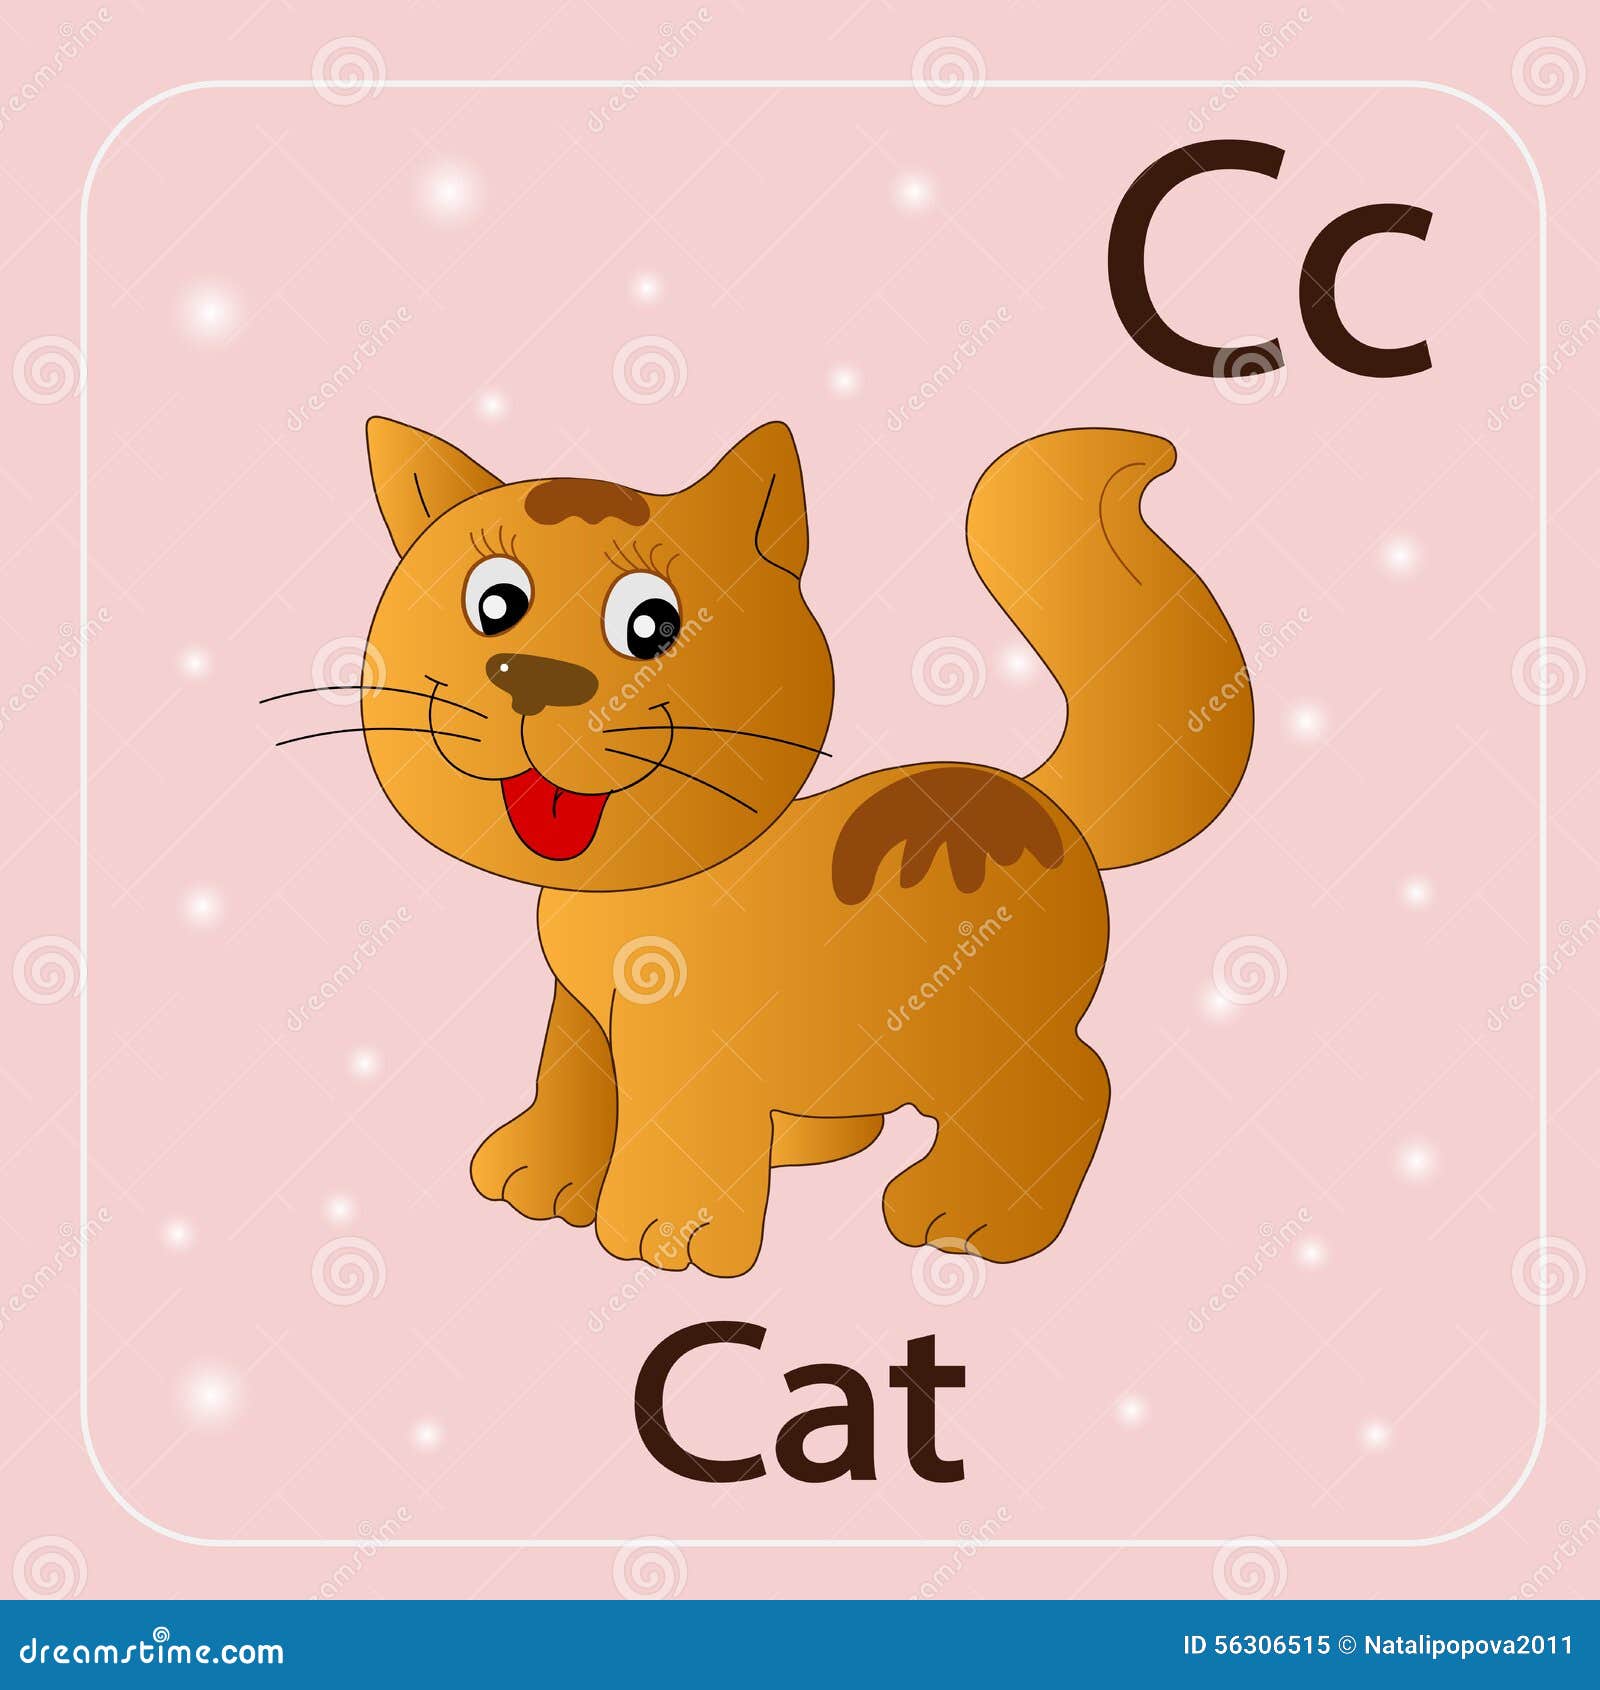 Включи английского кота. Карточка на английском языке кошка. Кошка карточка для детей. Карточки с английскими словами Cat. Карточки со словами на английском для детей кошка.